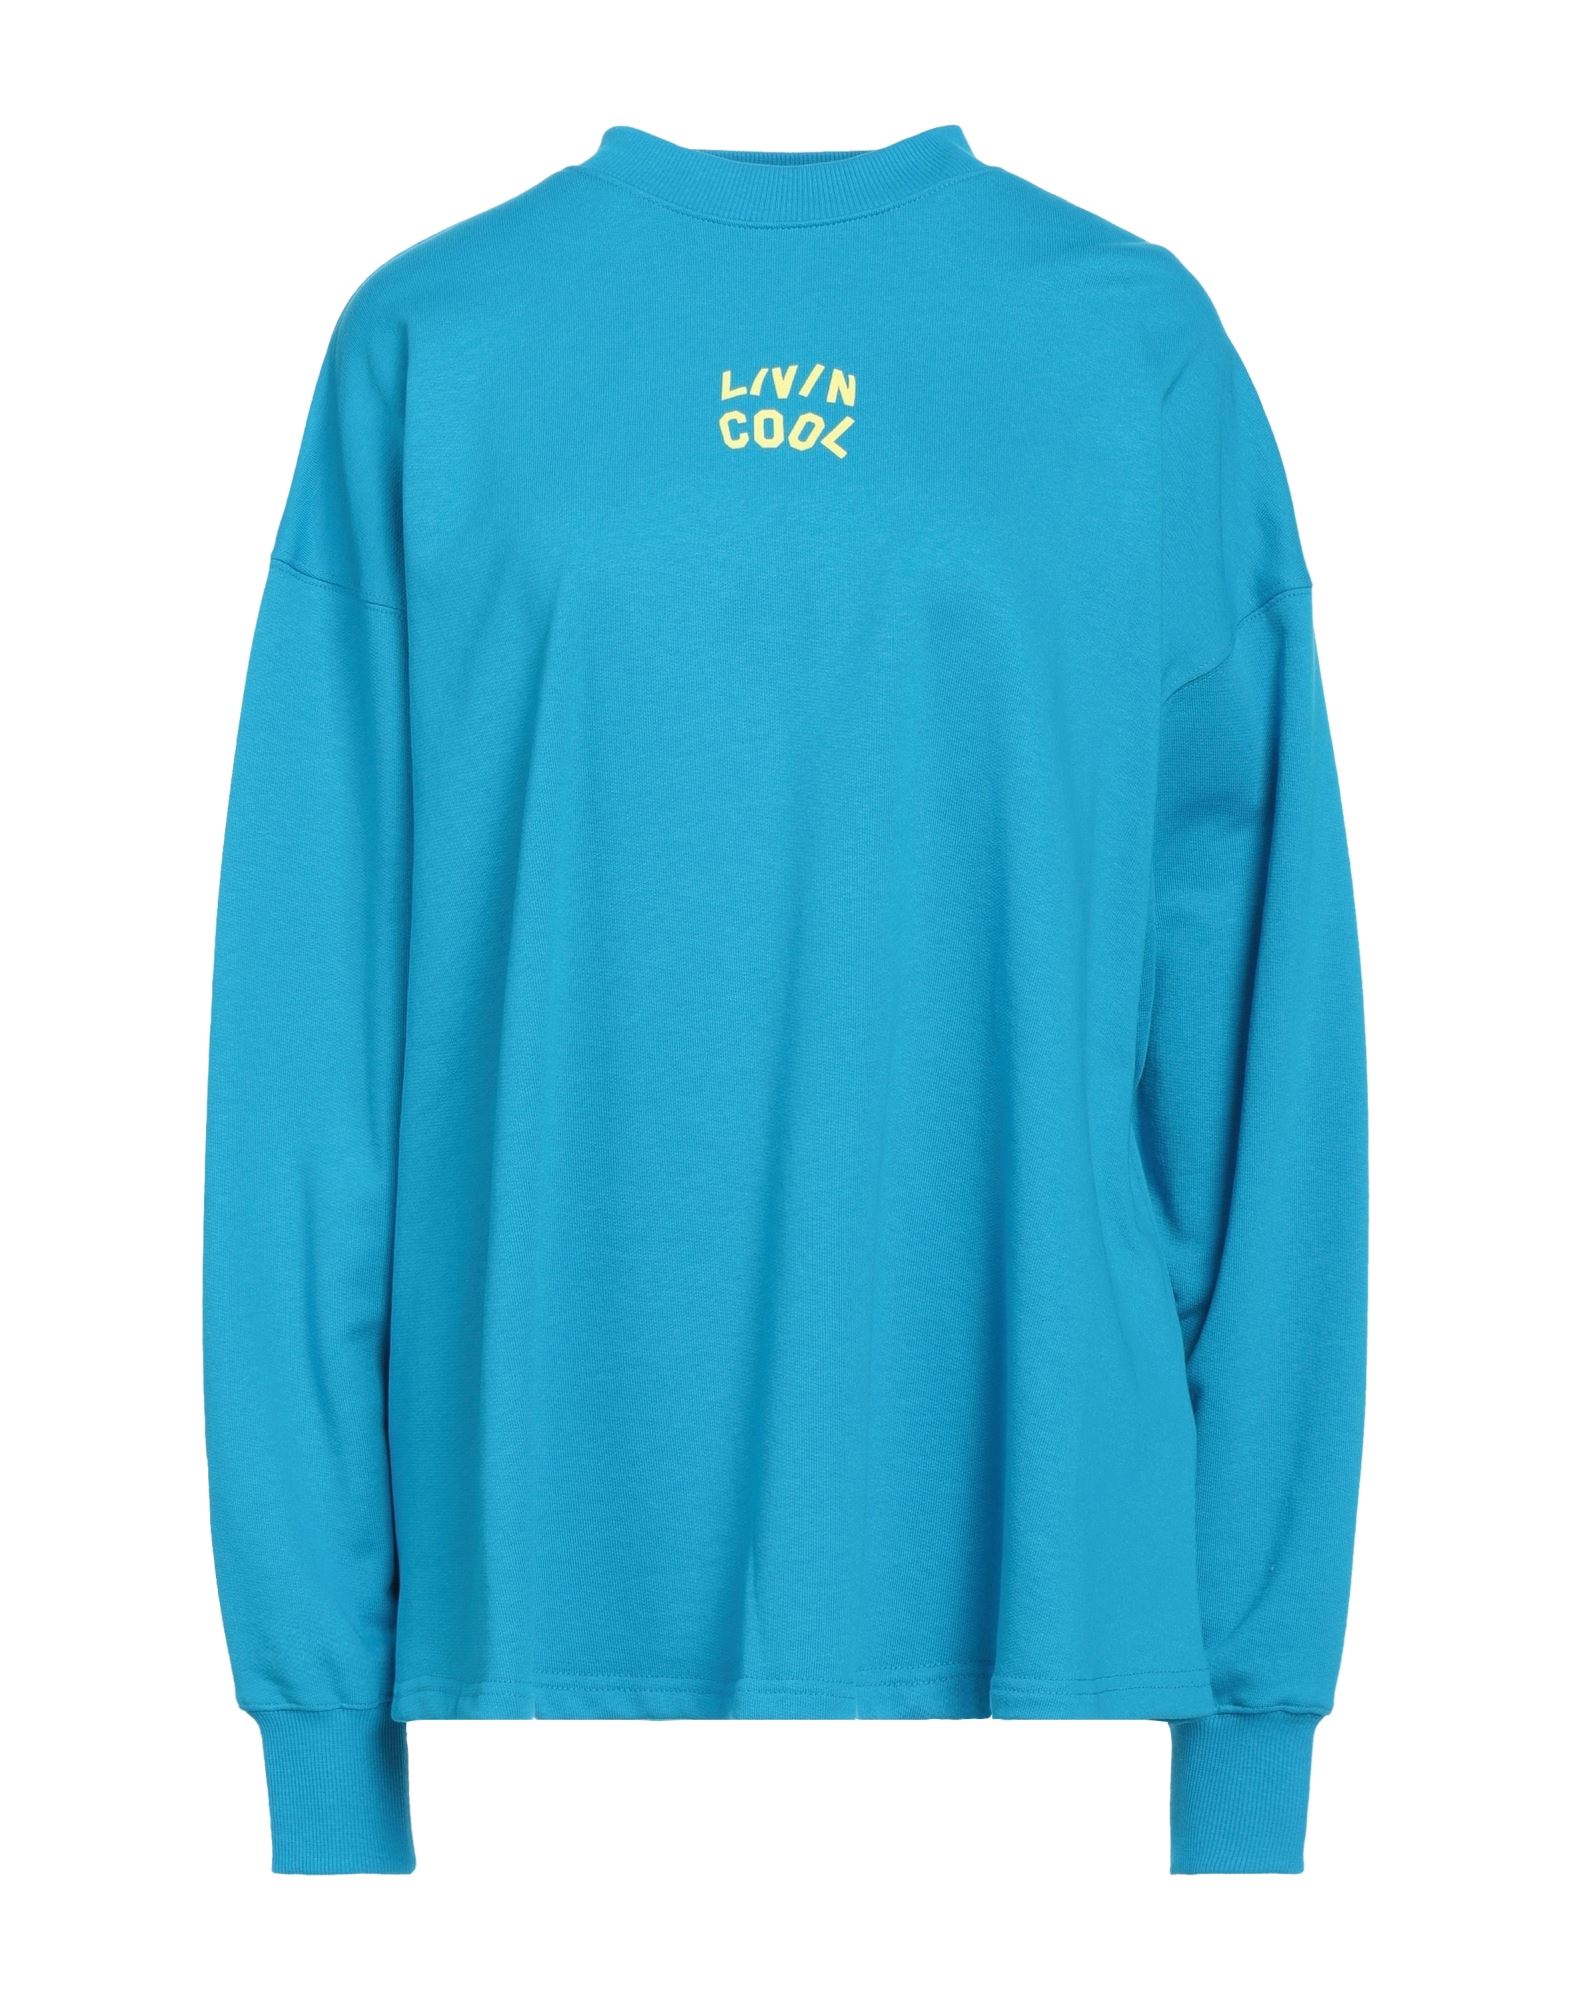 Livincool Sweatshirts In Blue